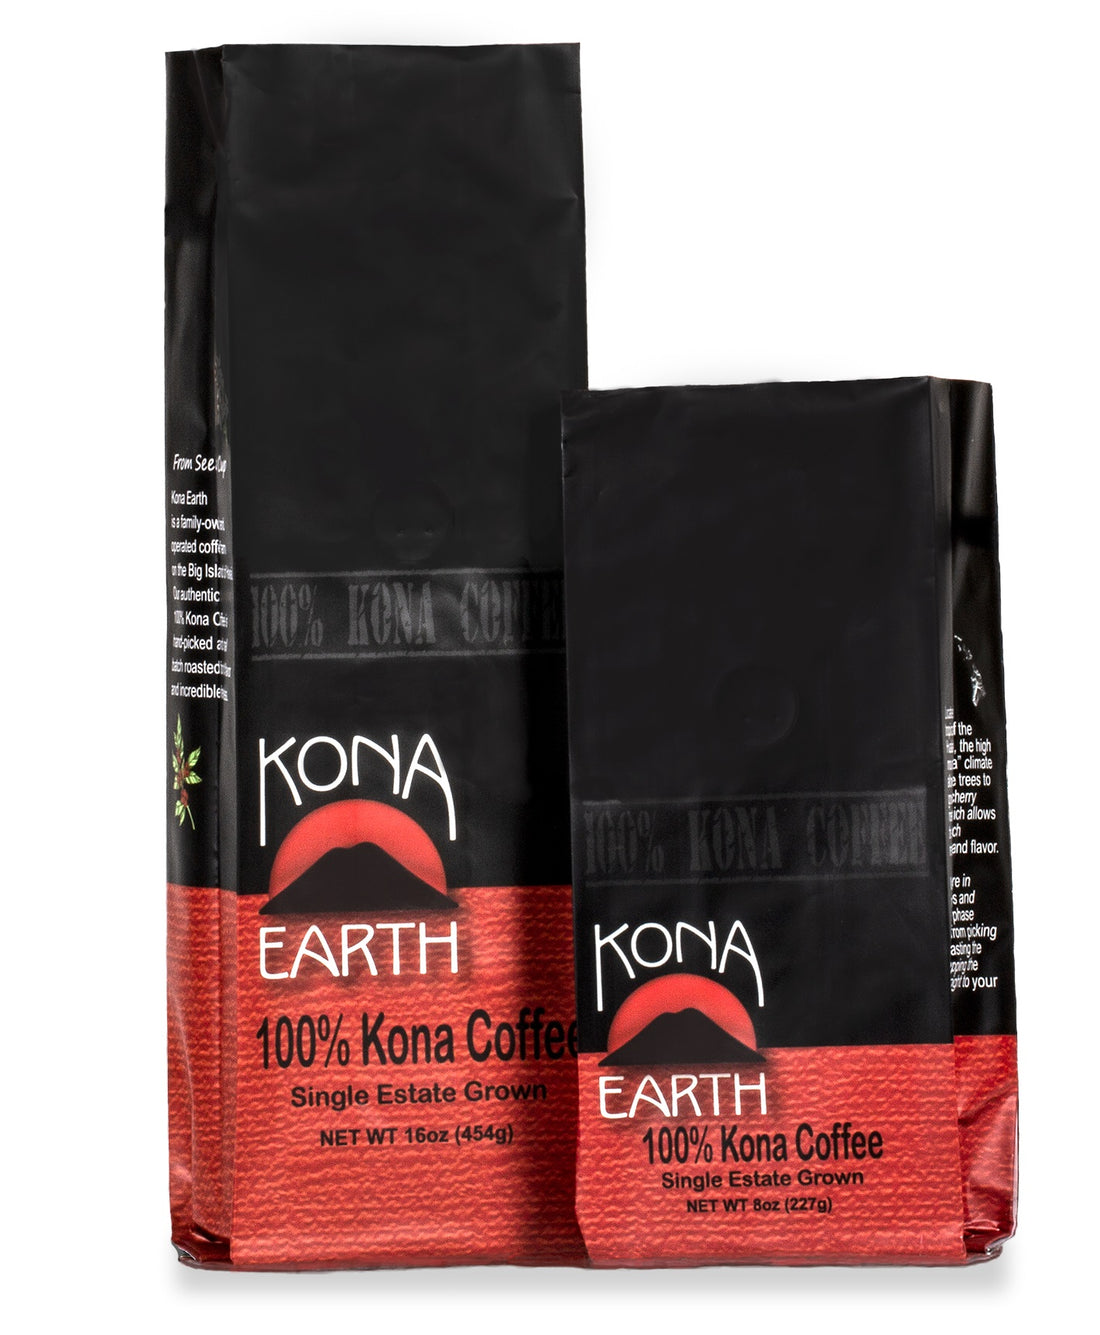 Kona Earth coffee bags